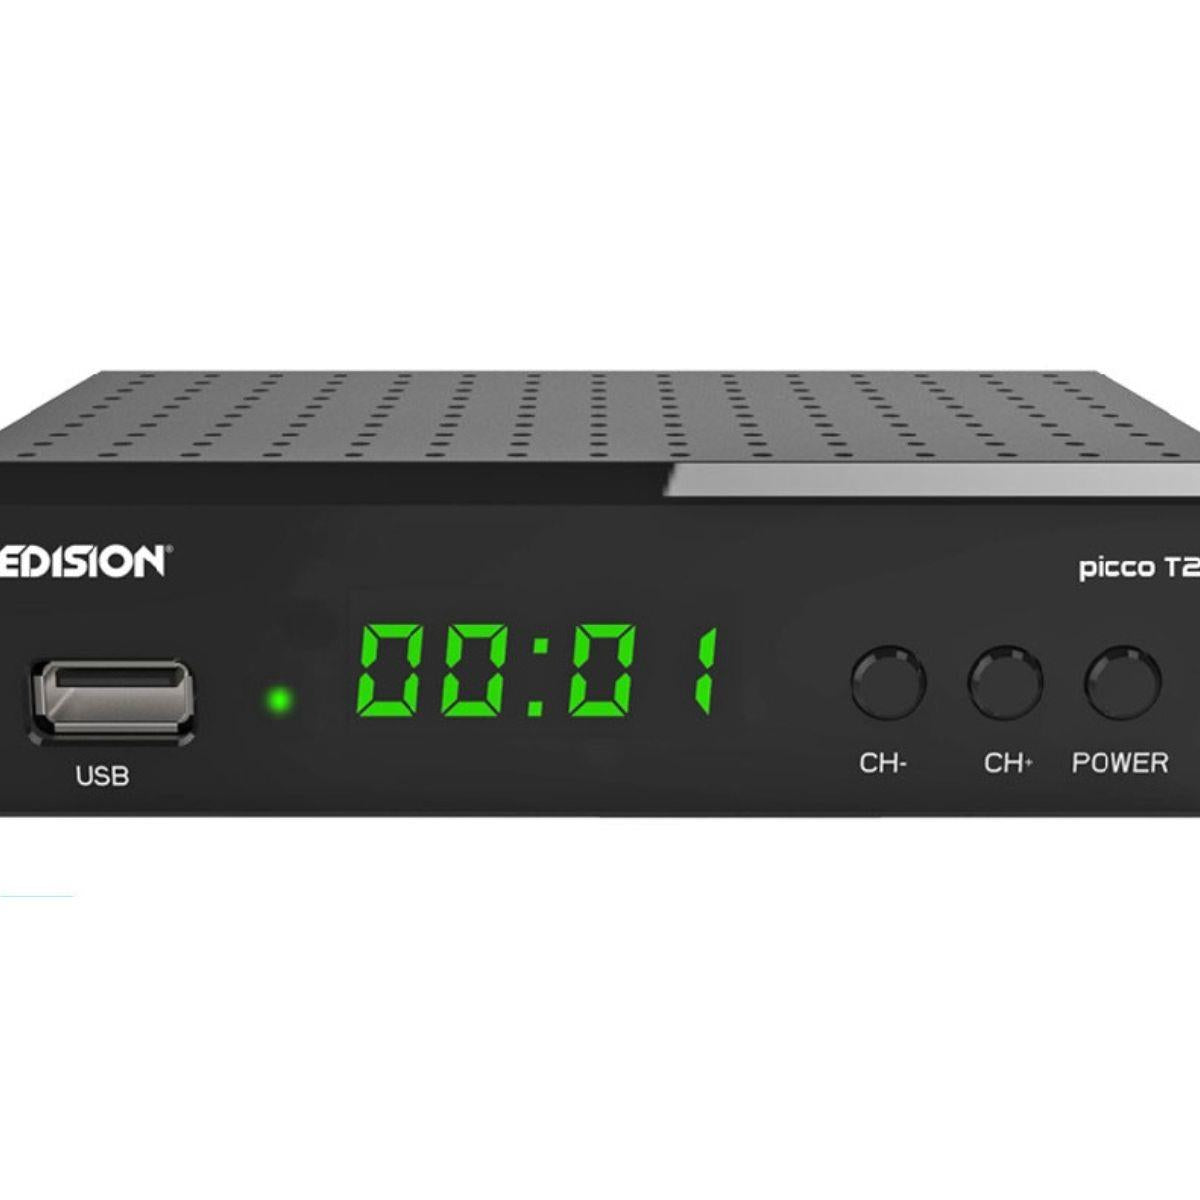 Edision™ Picco T2 DVB-T2 Receiver | Multimedia Playback